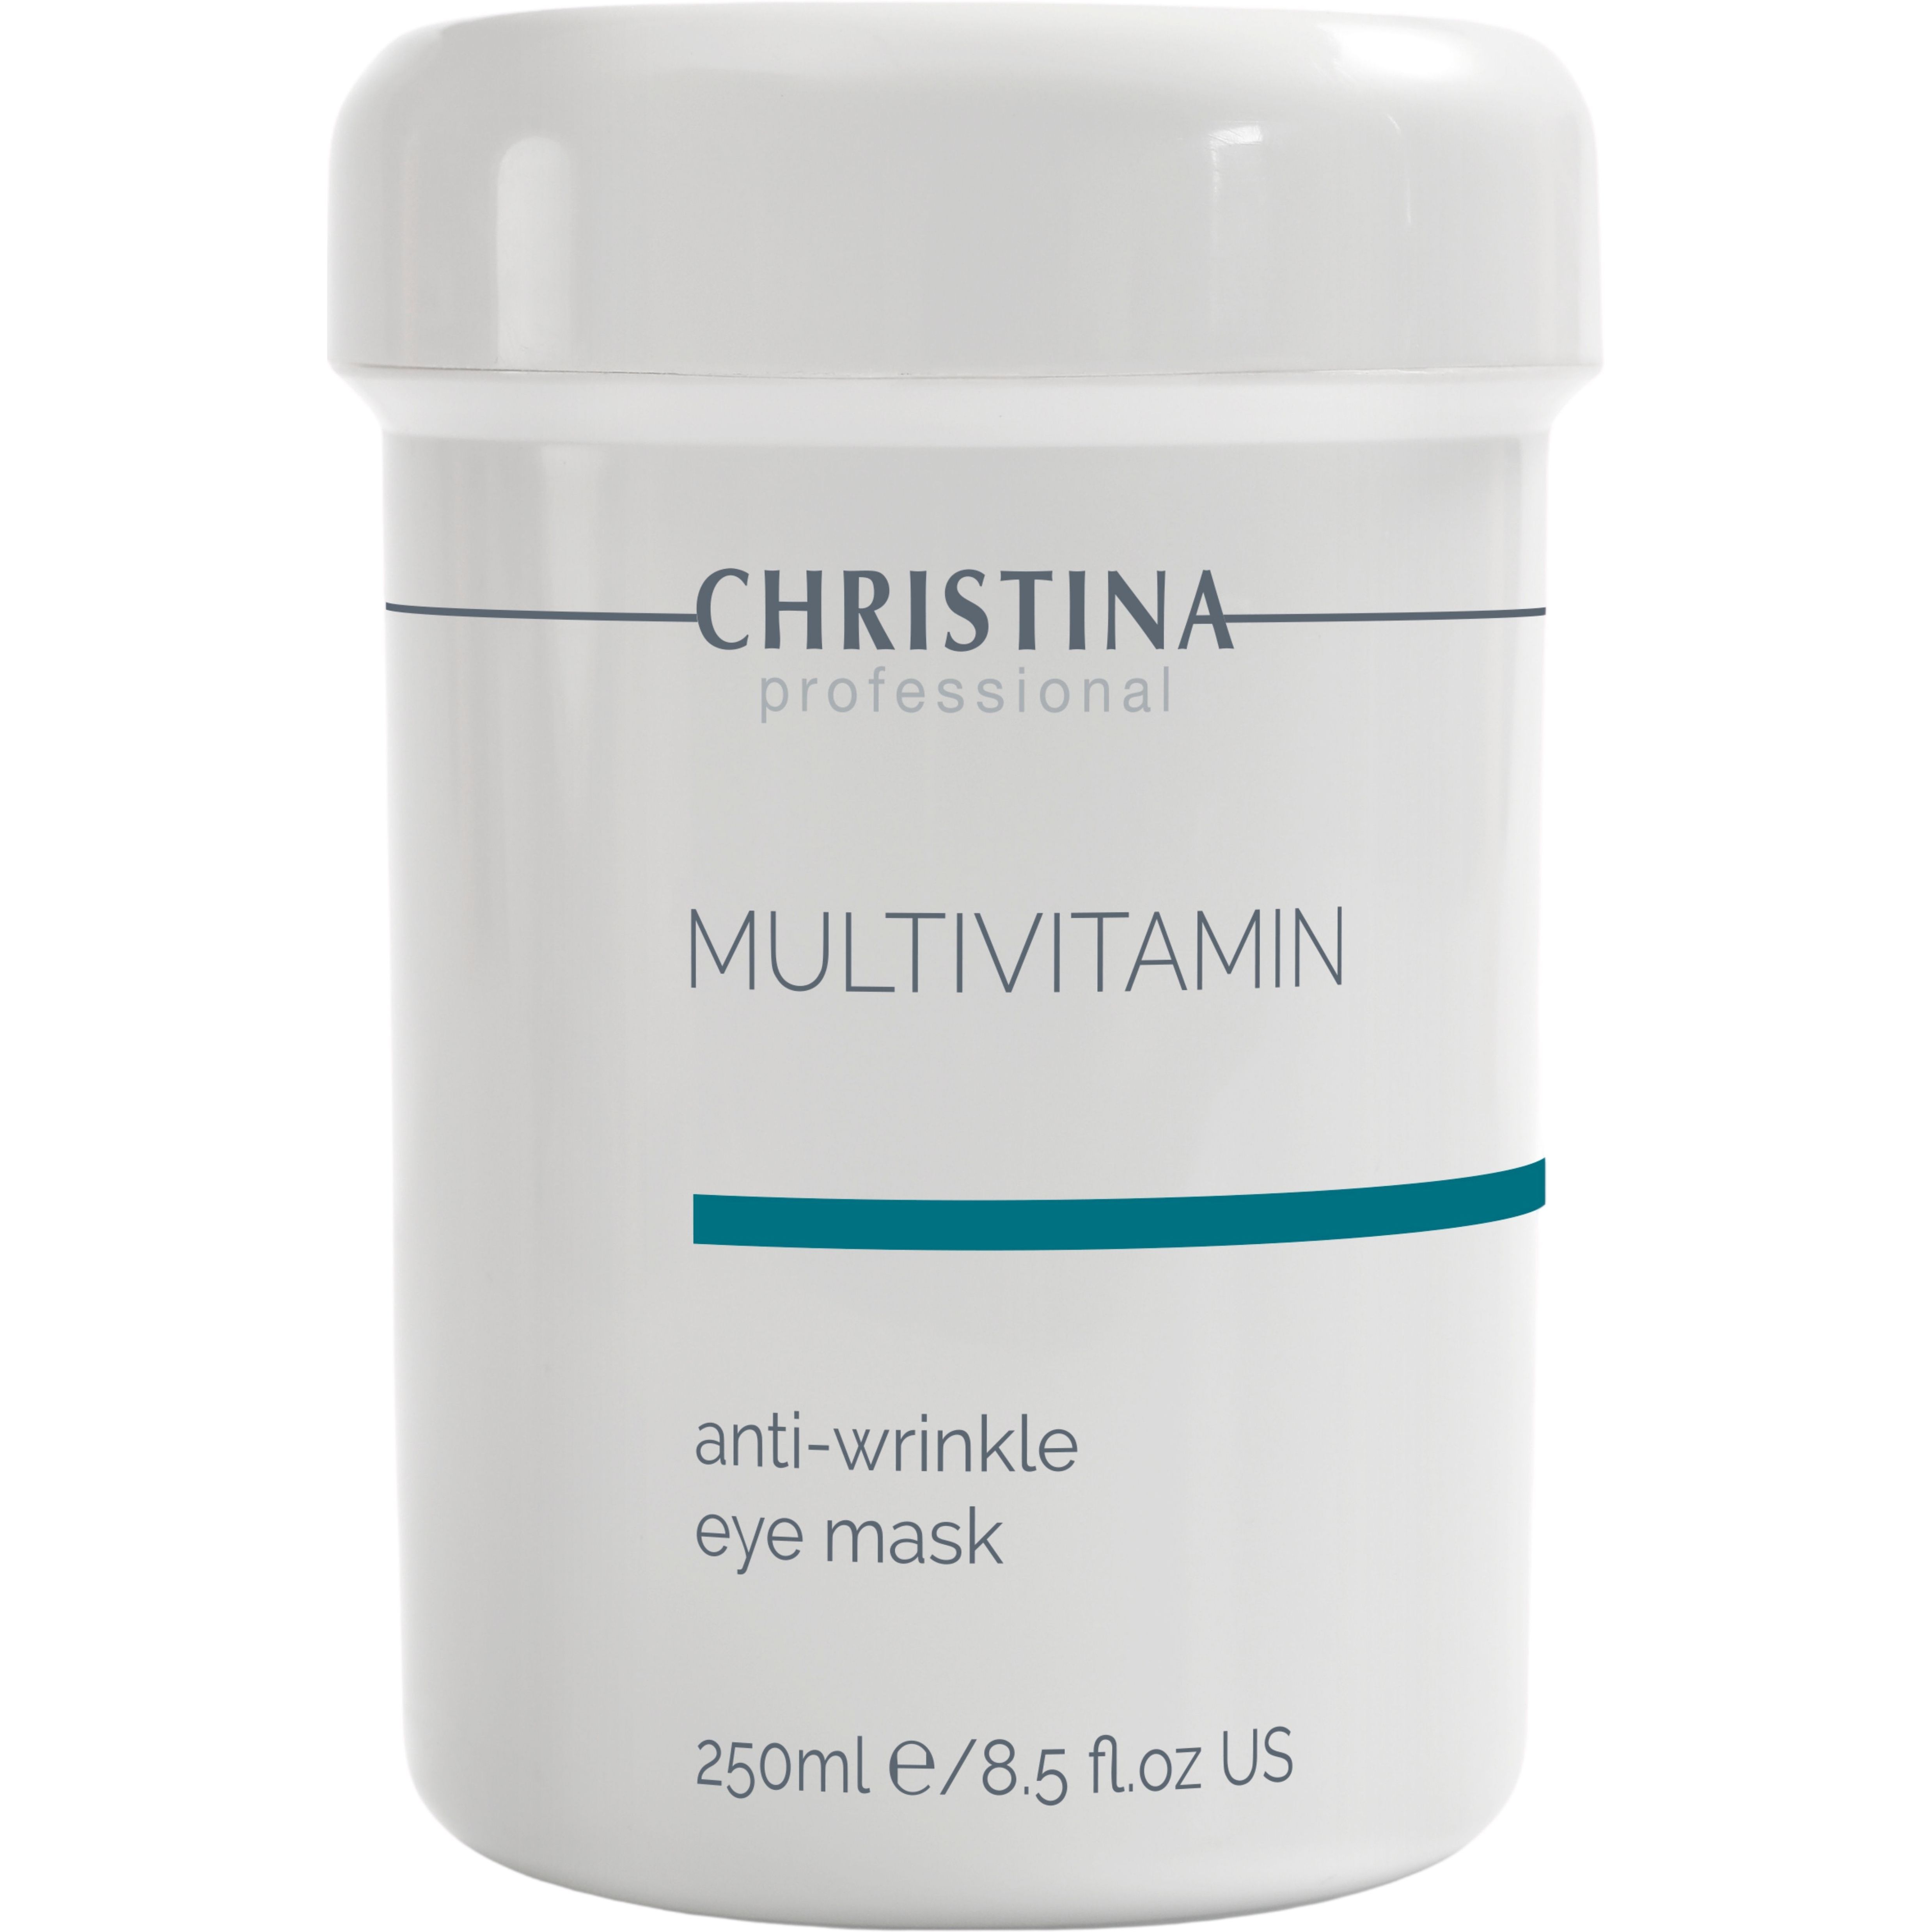 Мультивитаминная маска против морщин Christina Multivitamin Anti-Wrinkle Eye Mask для зоны вокруг глаз 250 мл - фото 2